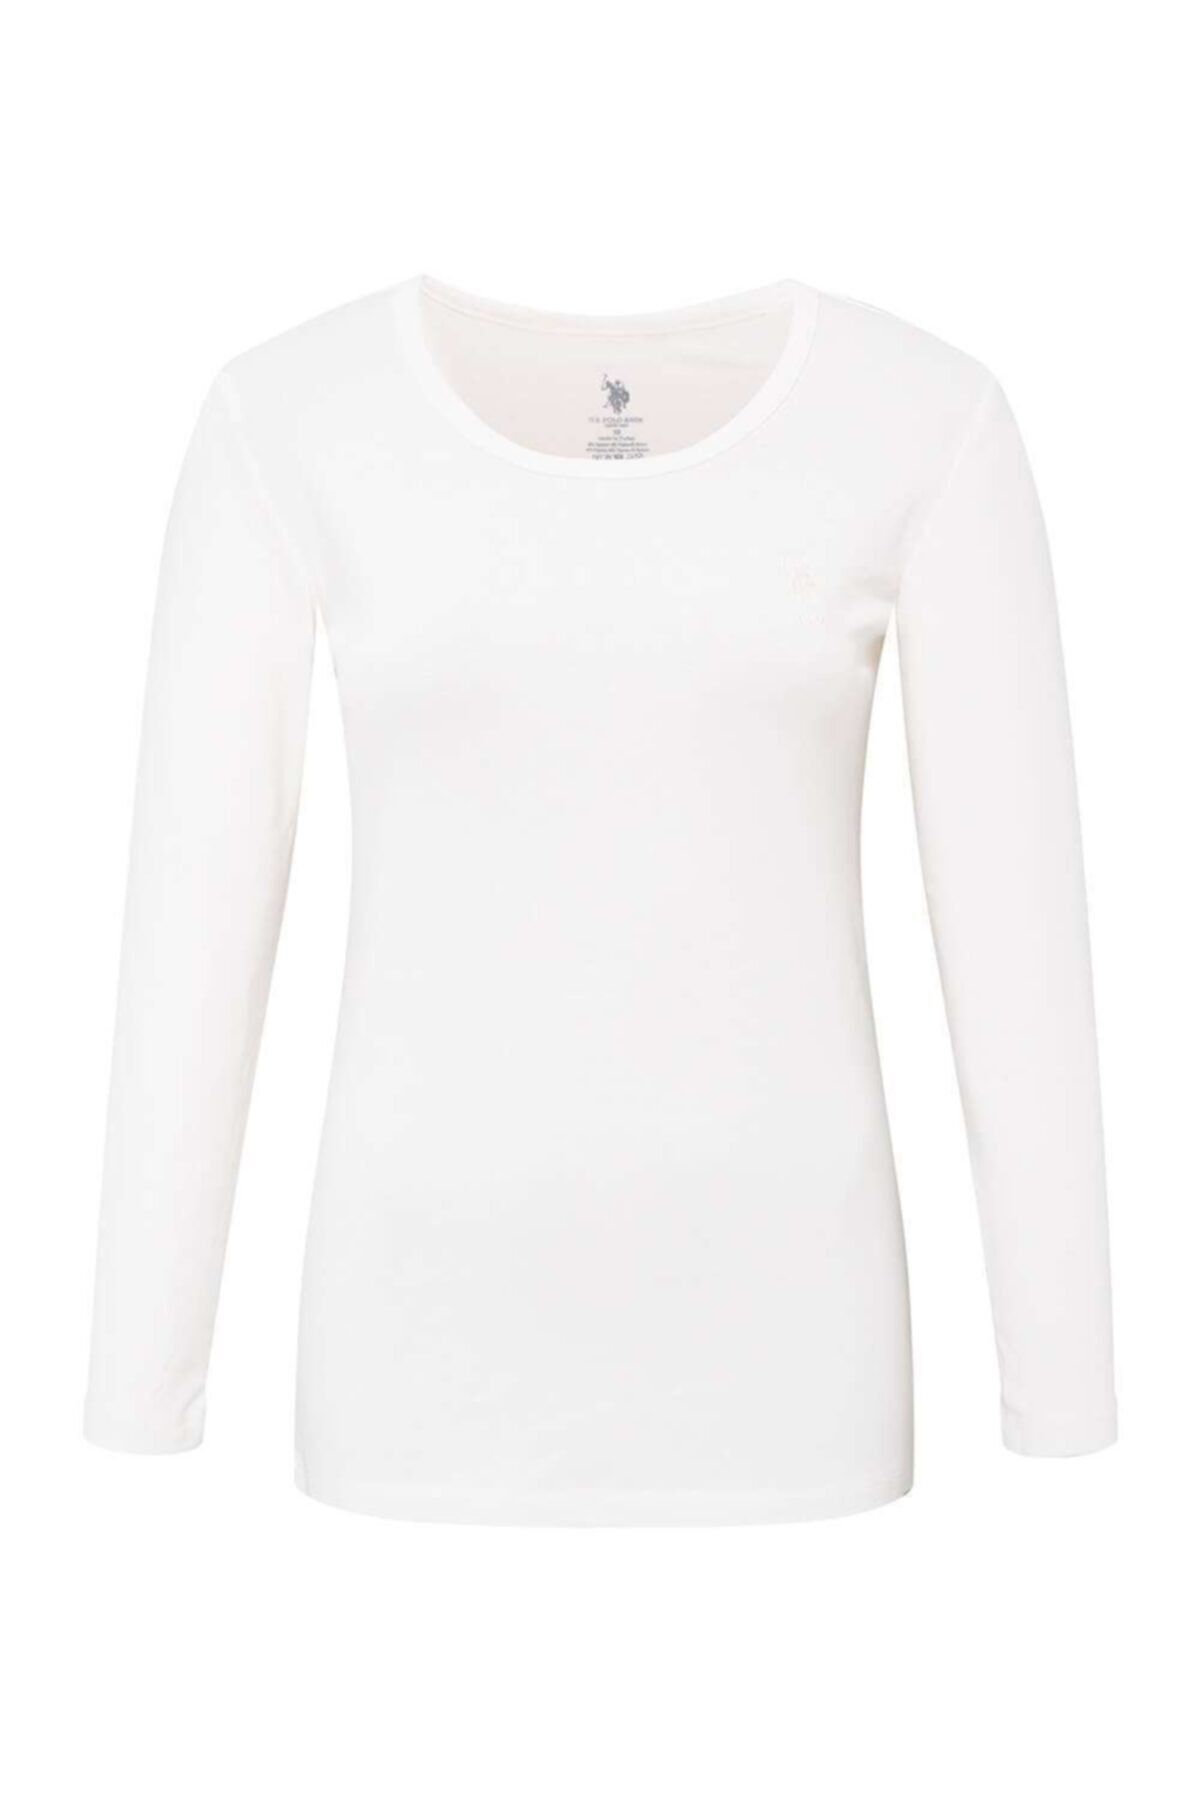 U.S. Polo Assn. Kadın Beyaz Termal Kısa Kol T-shirt